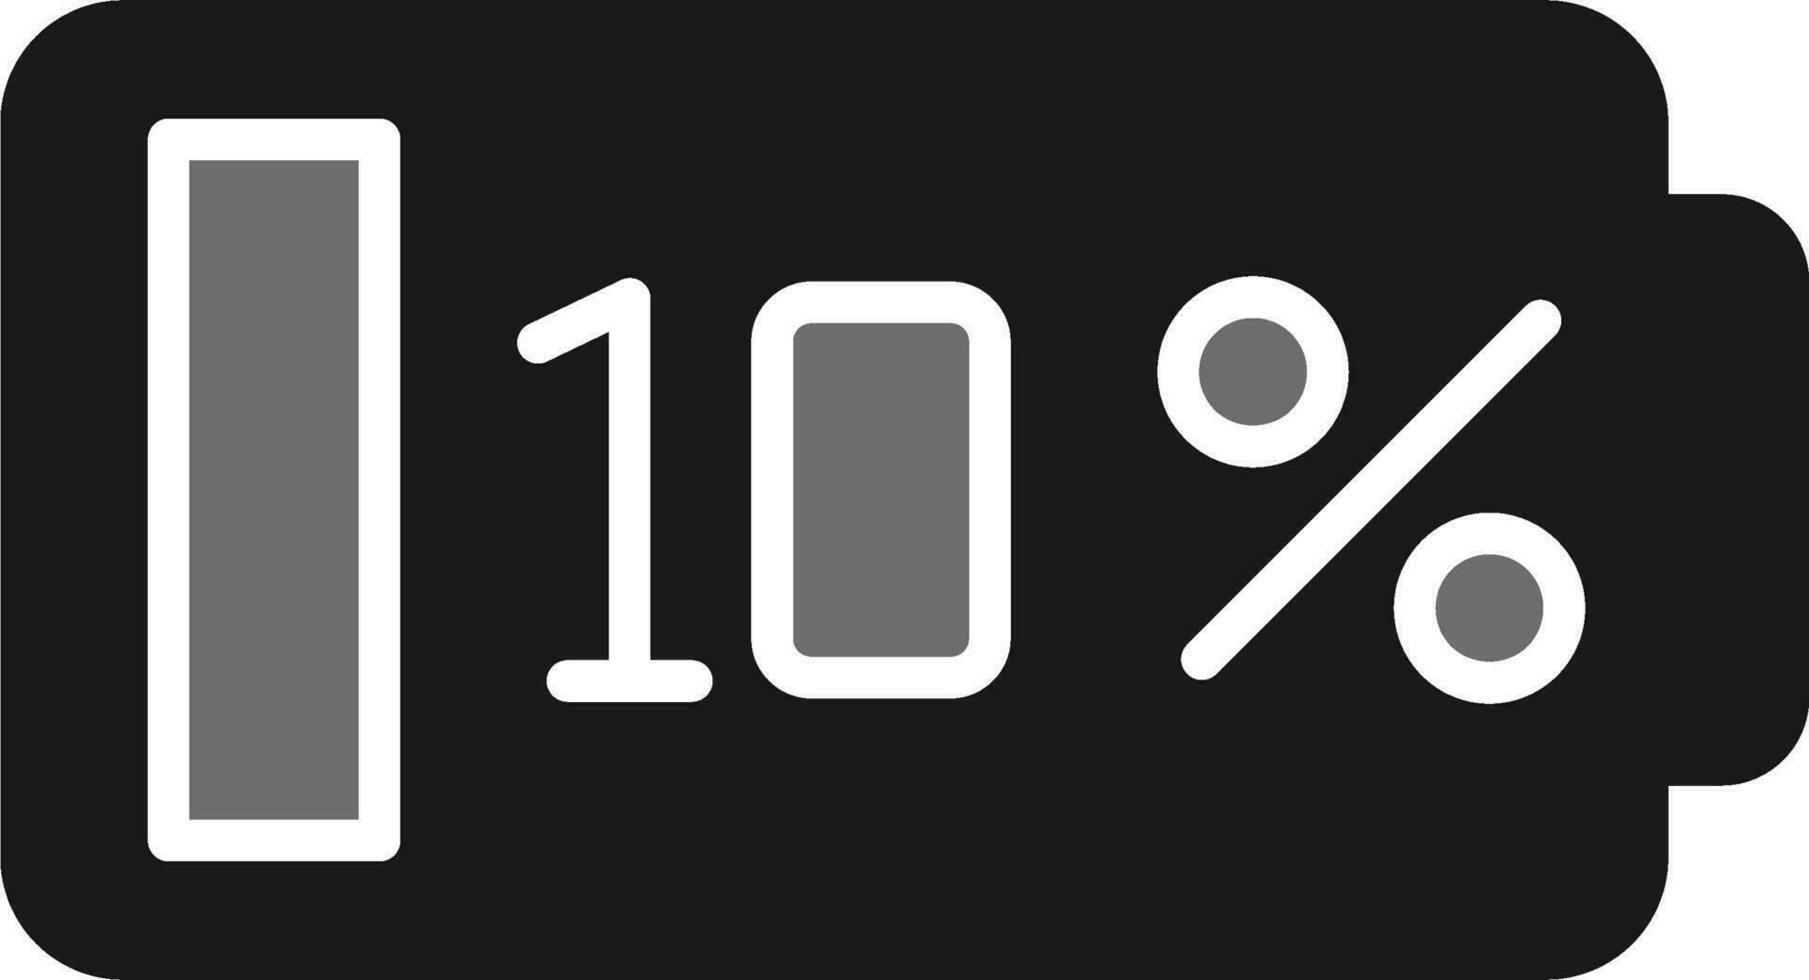 10 procent vektor ikon